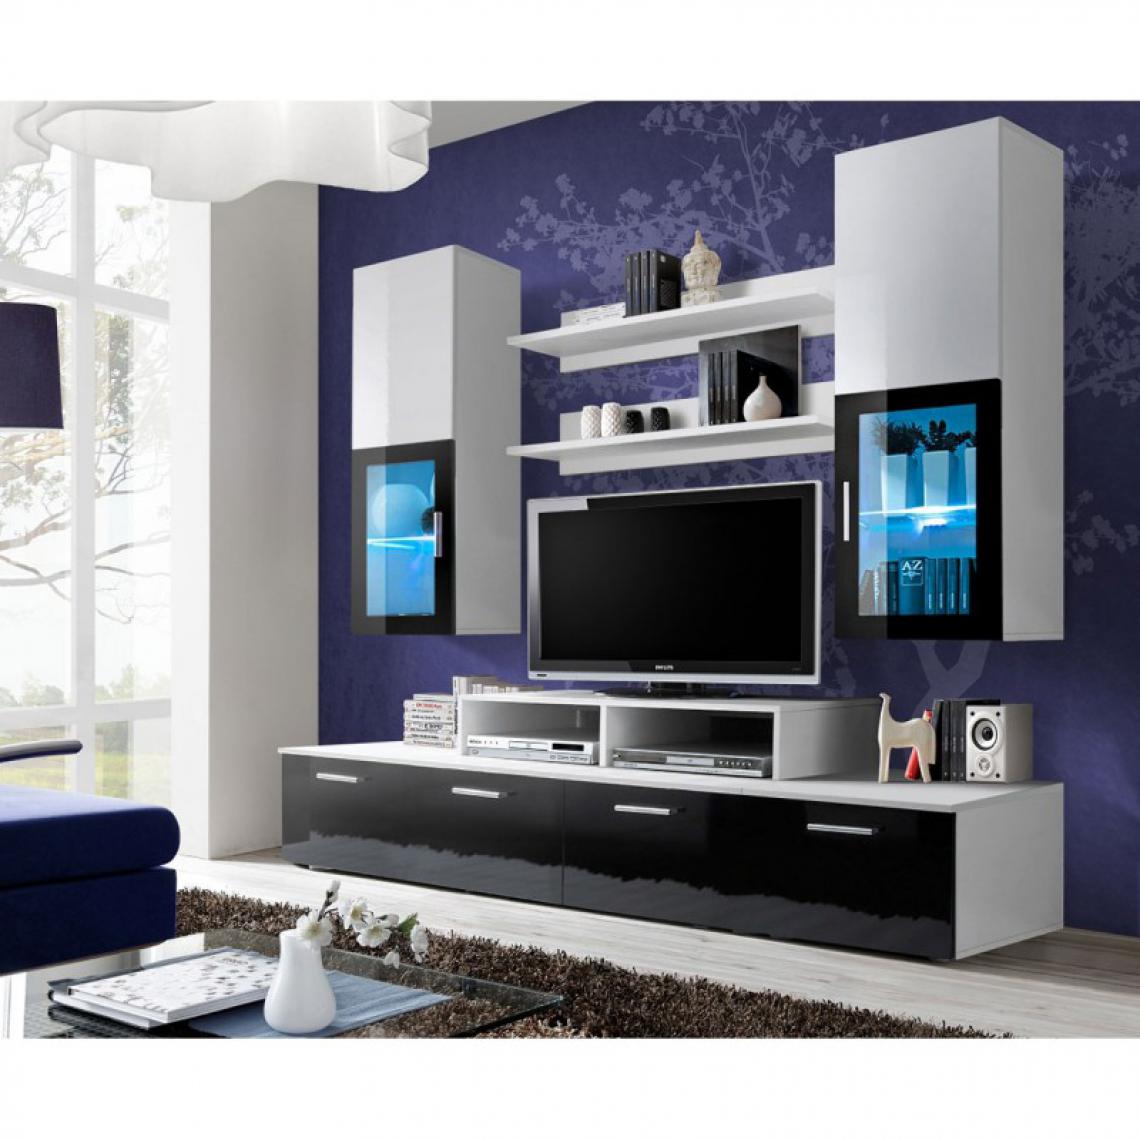 Ac-Deco - Meuble TV Mural Design Mini 200cm Noir & Blanc - Meubles TV, Hi-Fi